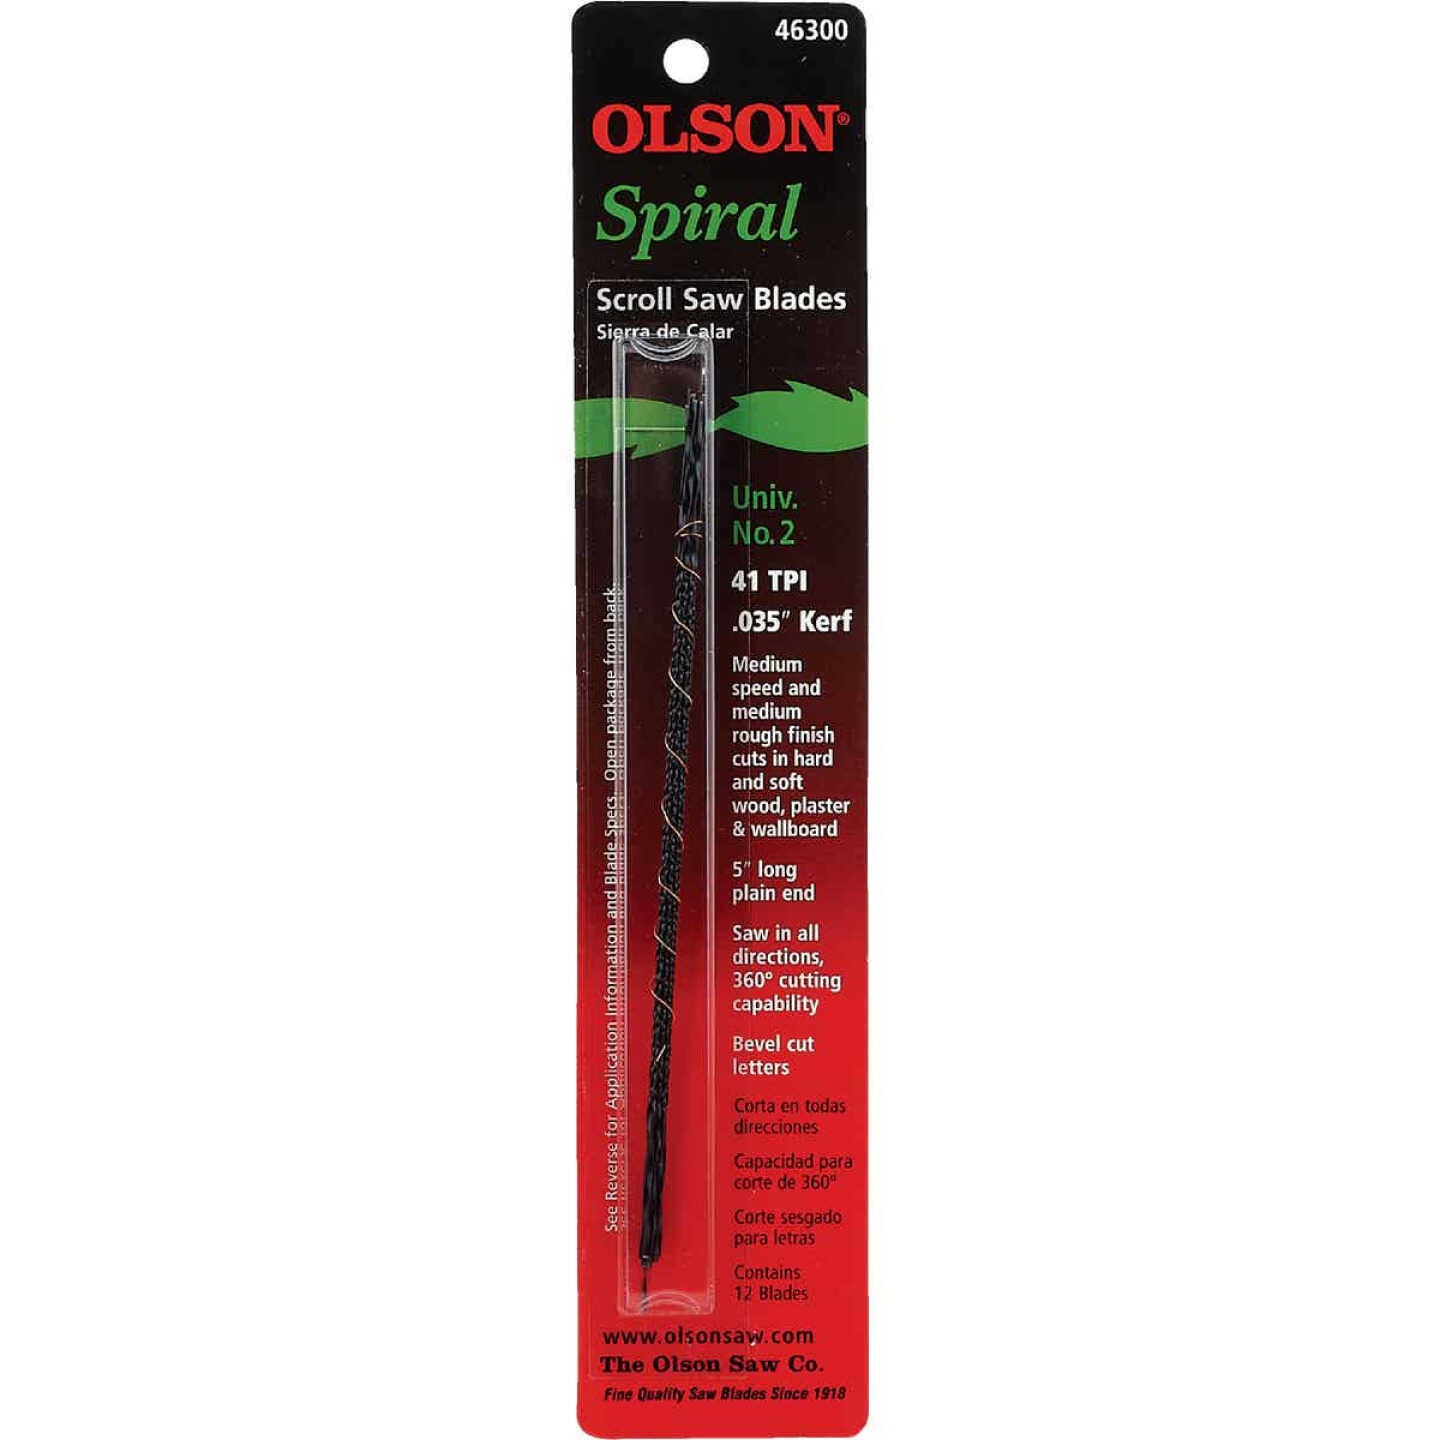 Olson Scroll Saw Blade 5' 125mm 41tpi Spiral Cut Wood Plain End 6pc SSB46300 Power Tool Services